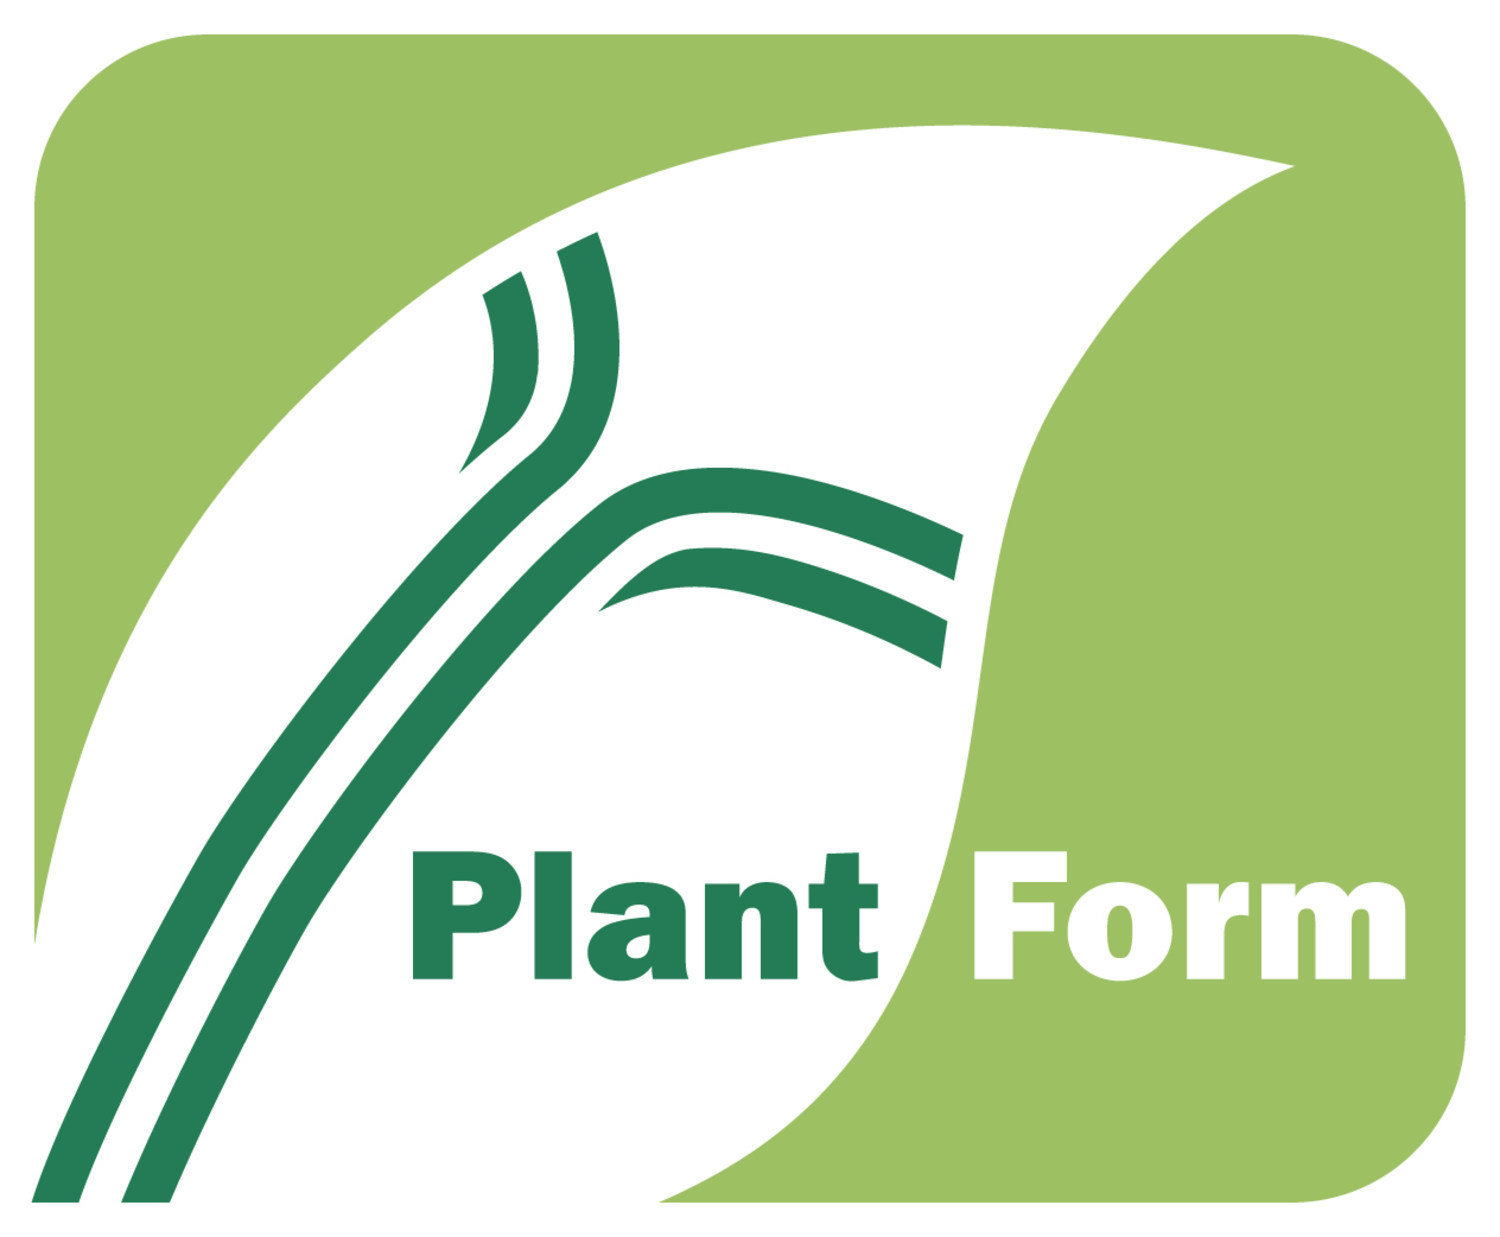 PlantForm partnerships responding to COVID-19 testing and treatment needs